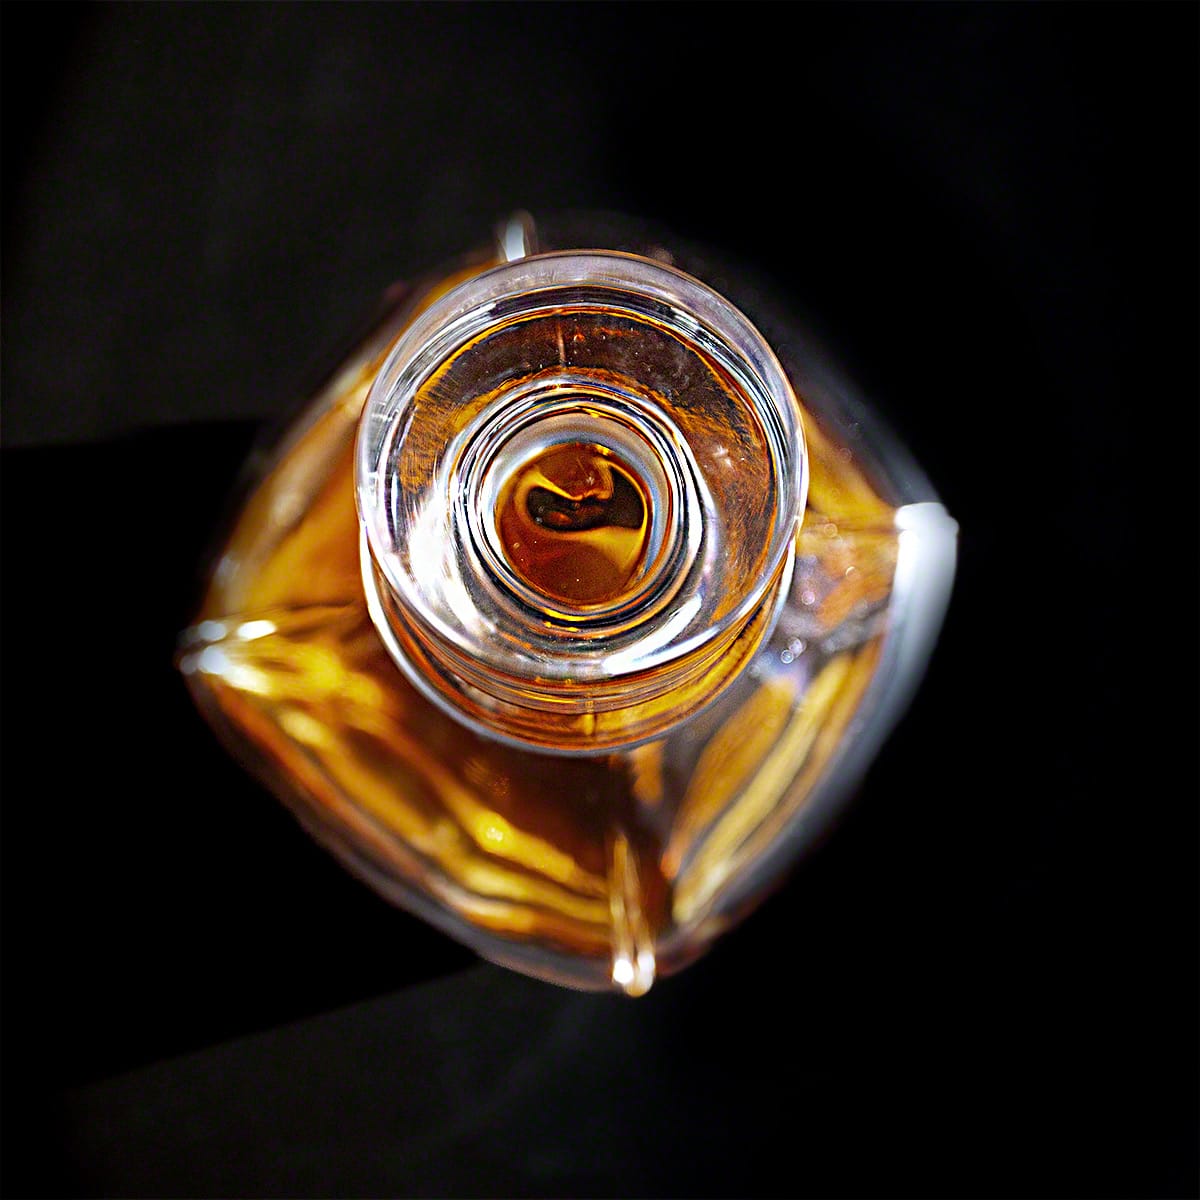 Draper Custom Bourbon Decanter Set with Crystal Glencairn Glasses Wood Box